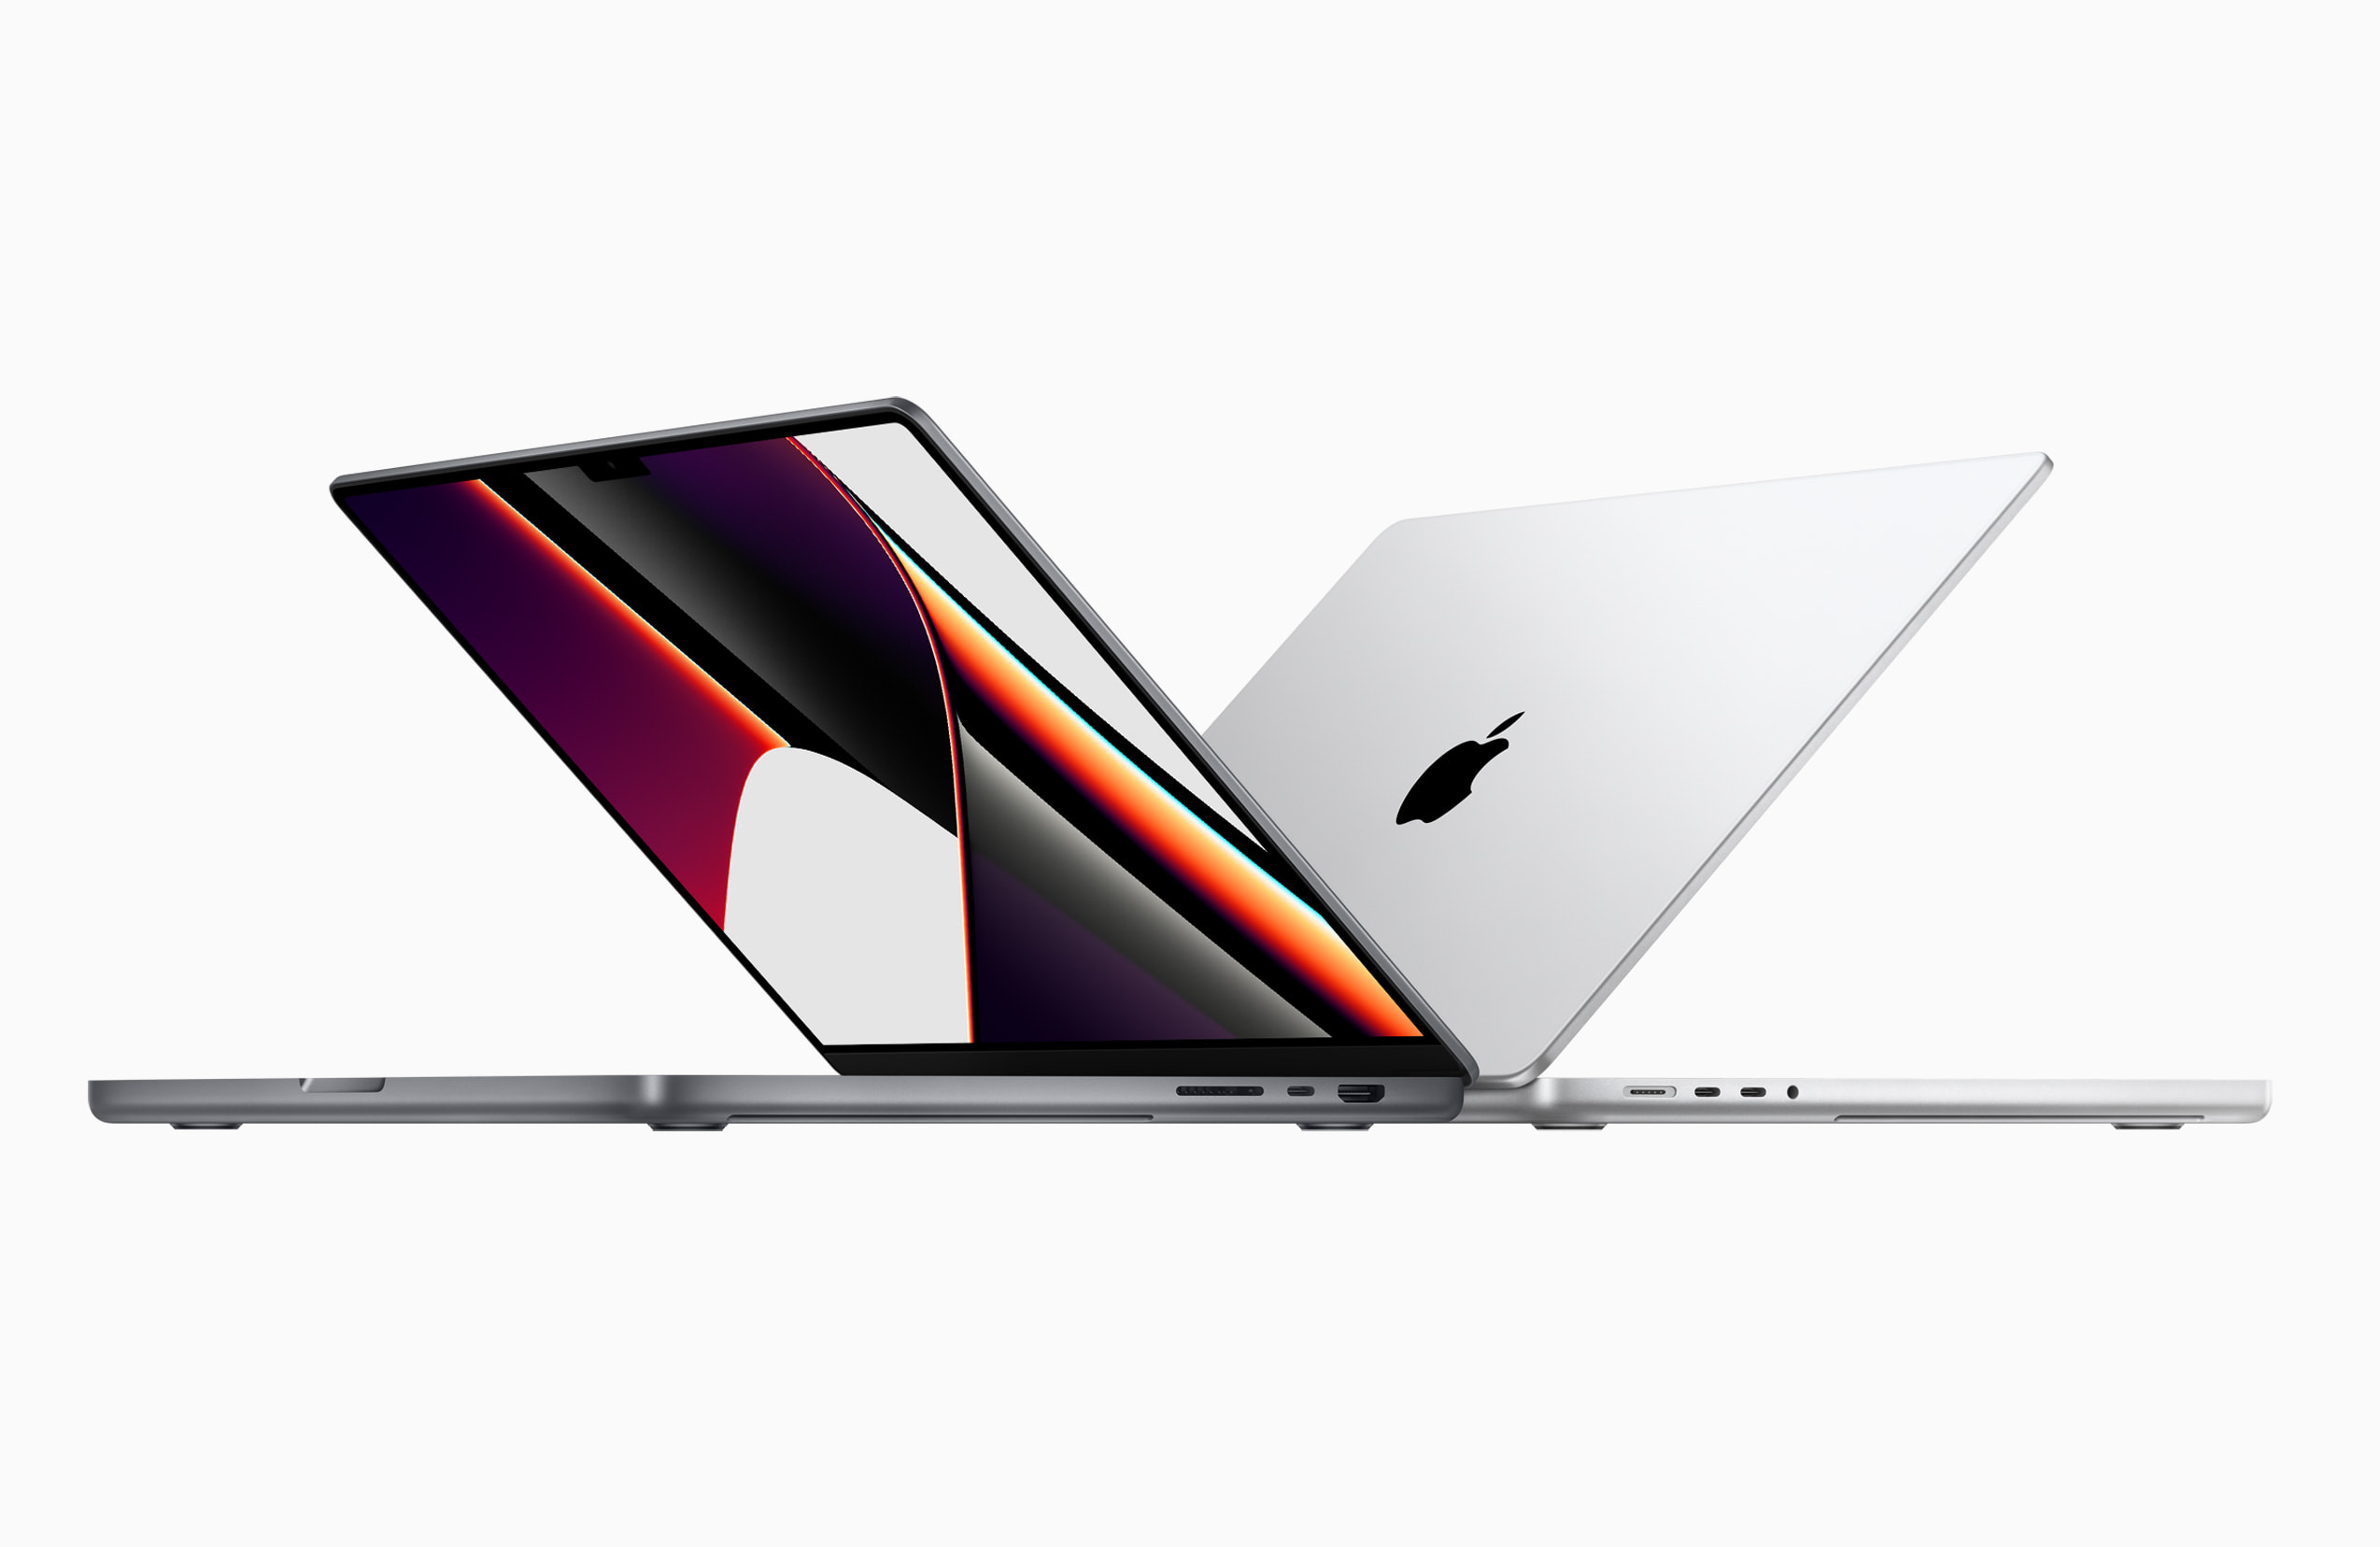 MacBook Pro (Retina 13-inch, Early 2015)